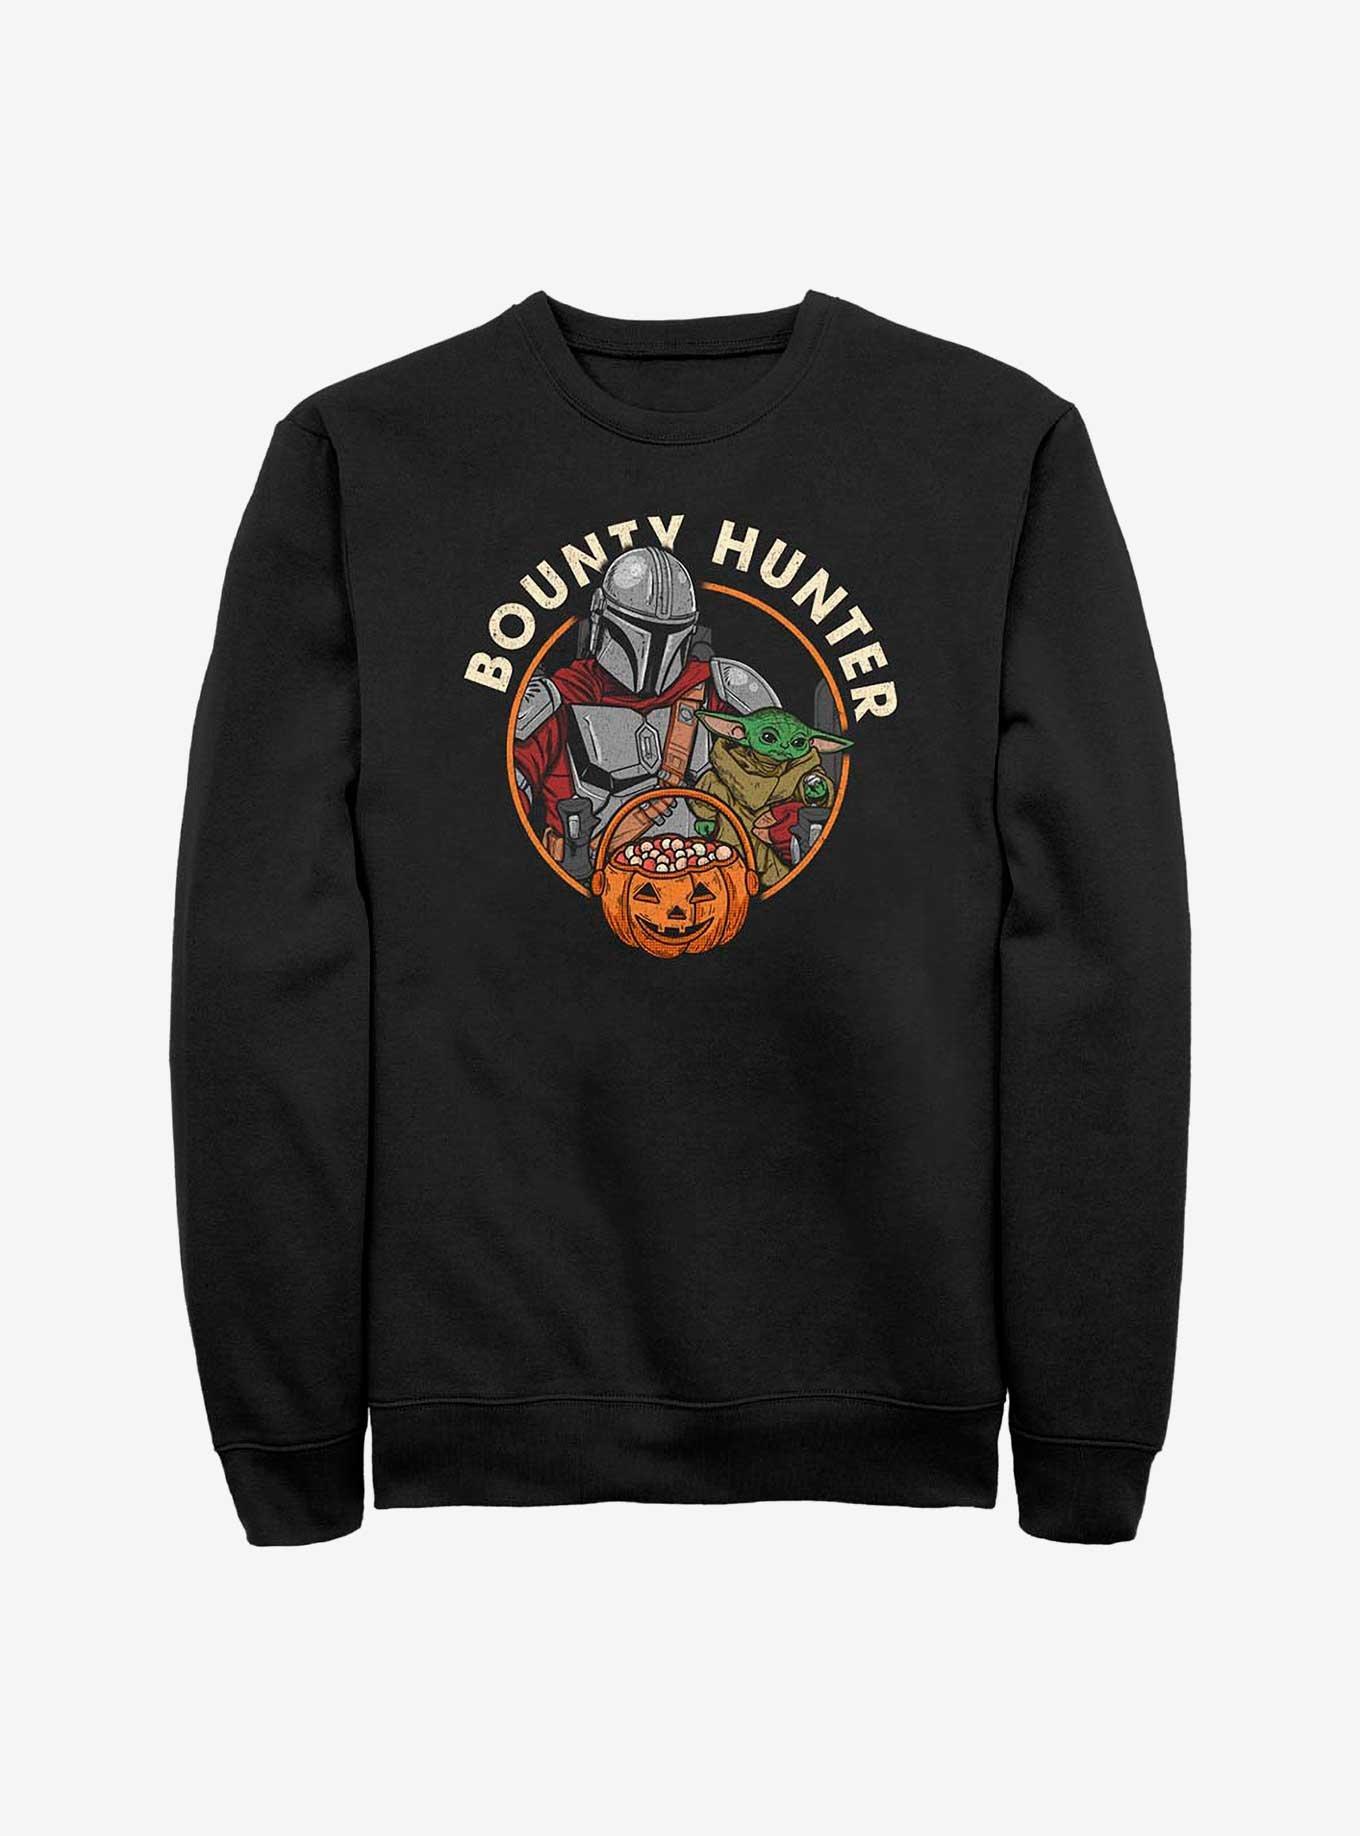 Star Wars The Mandalorian Candy Hunter Sweatshirt, BLACK, hi-res